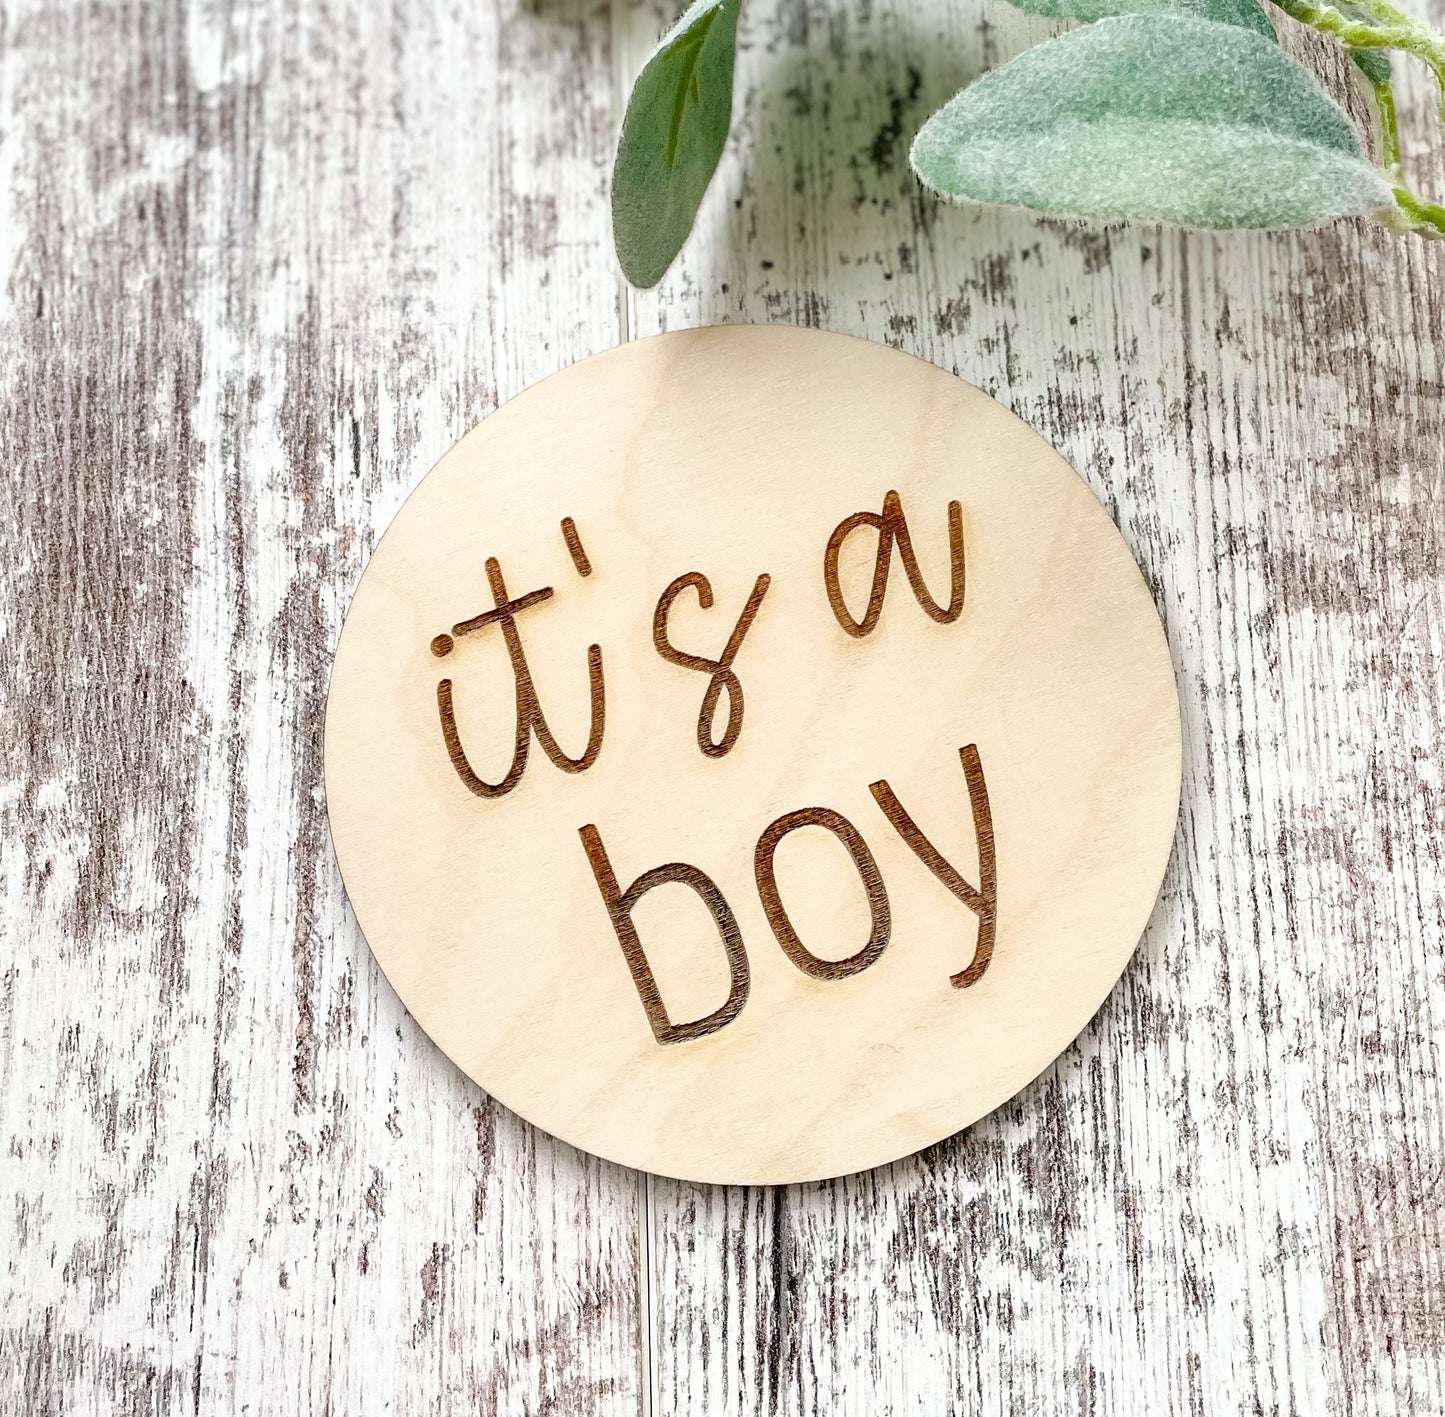 It’s A Boy Wood Sign